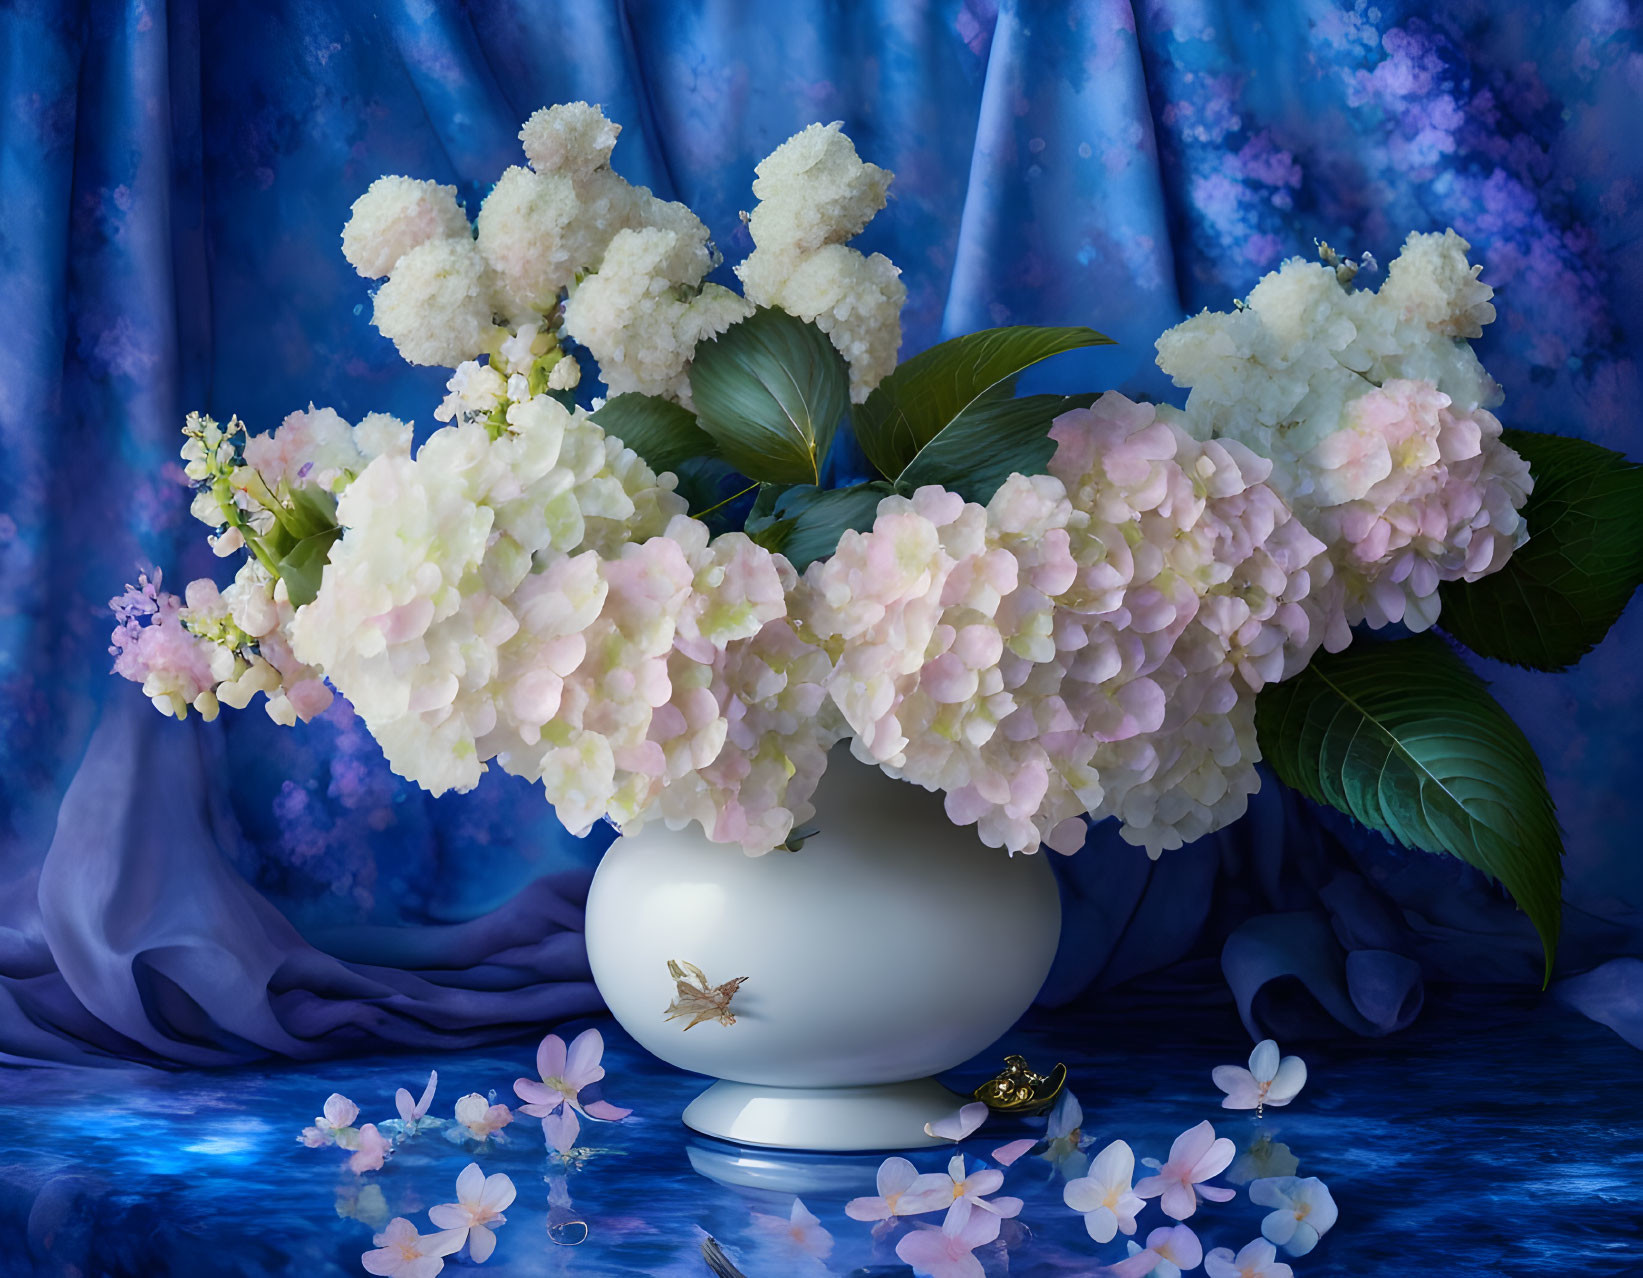 Colorful Still Life: White Vase, Hydrangeas, Blue Fabric Background